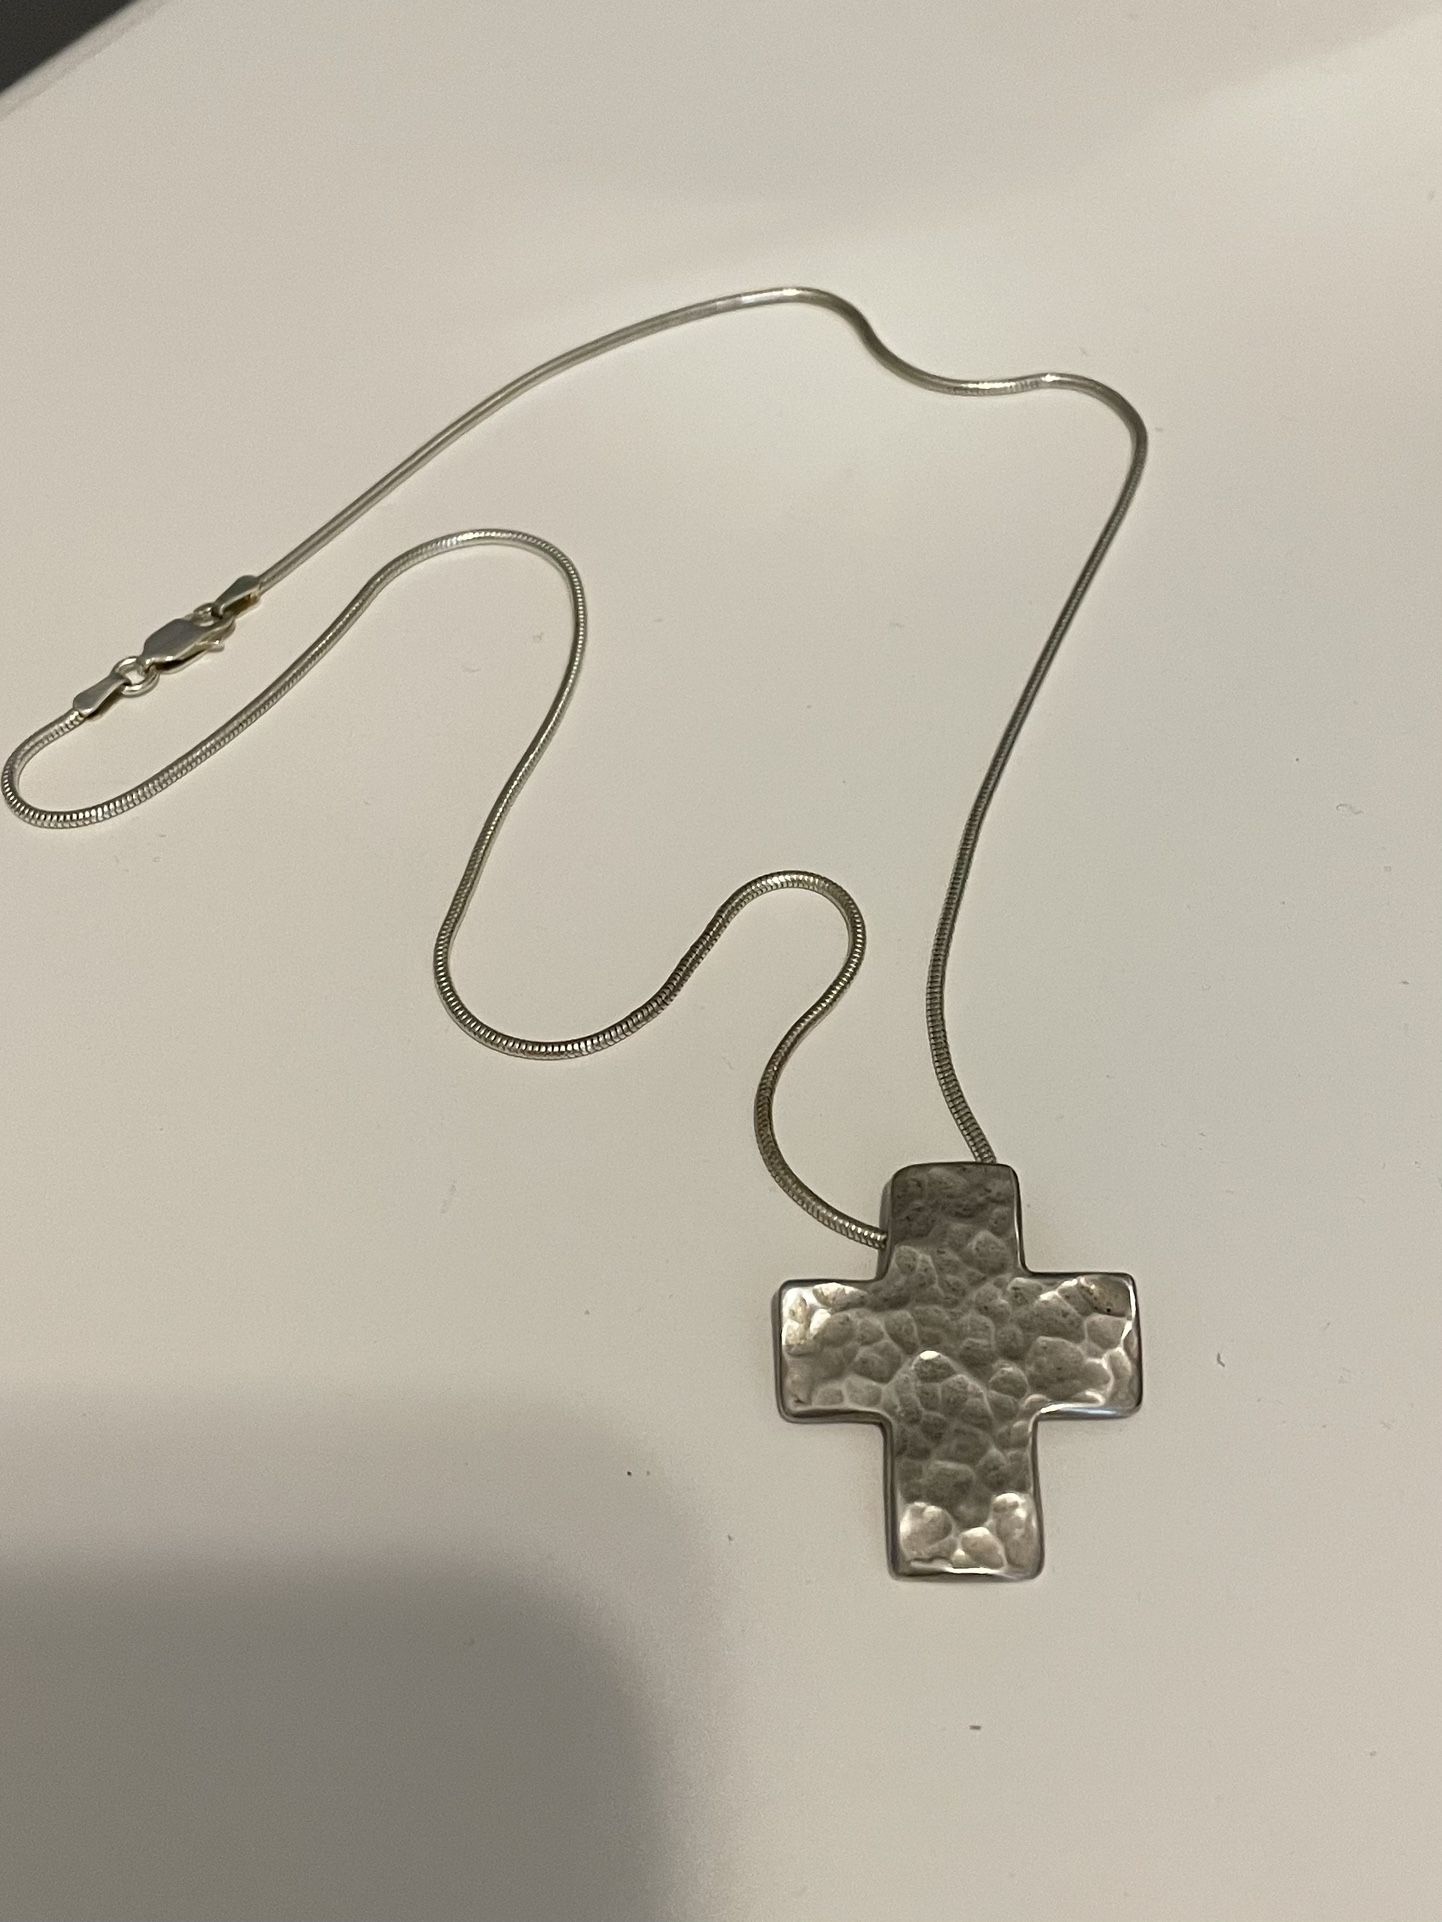 Silpada Sterling Silver Cross Pendant Necklace